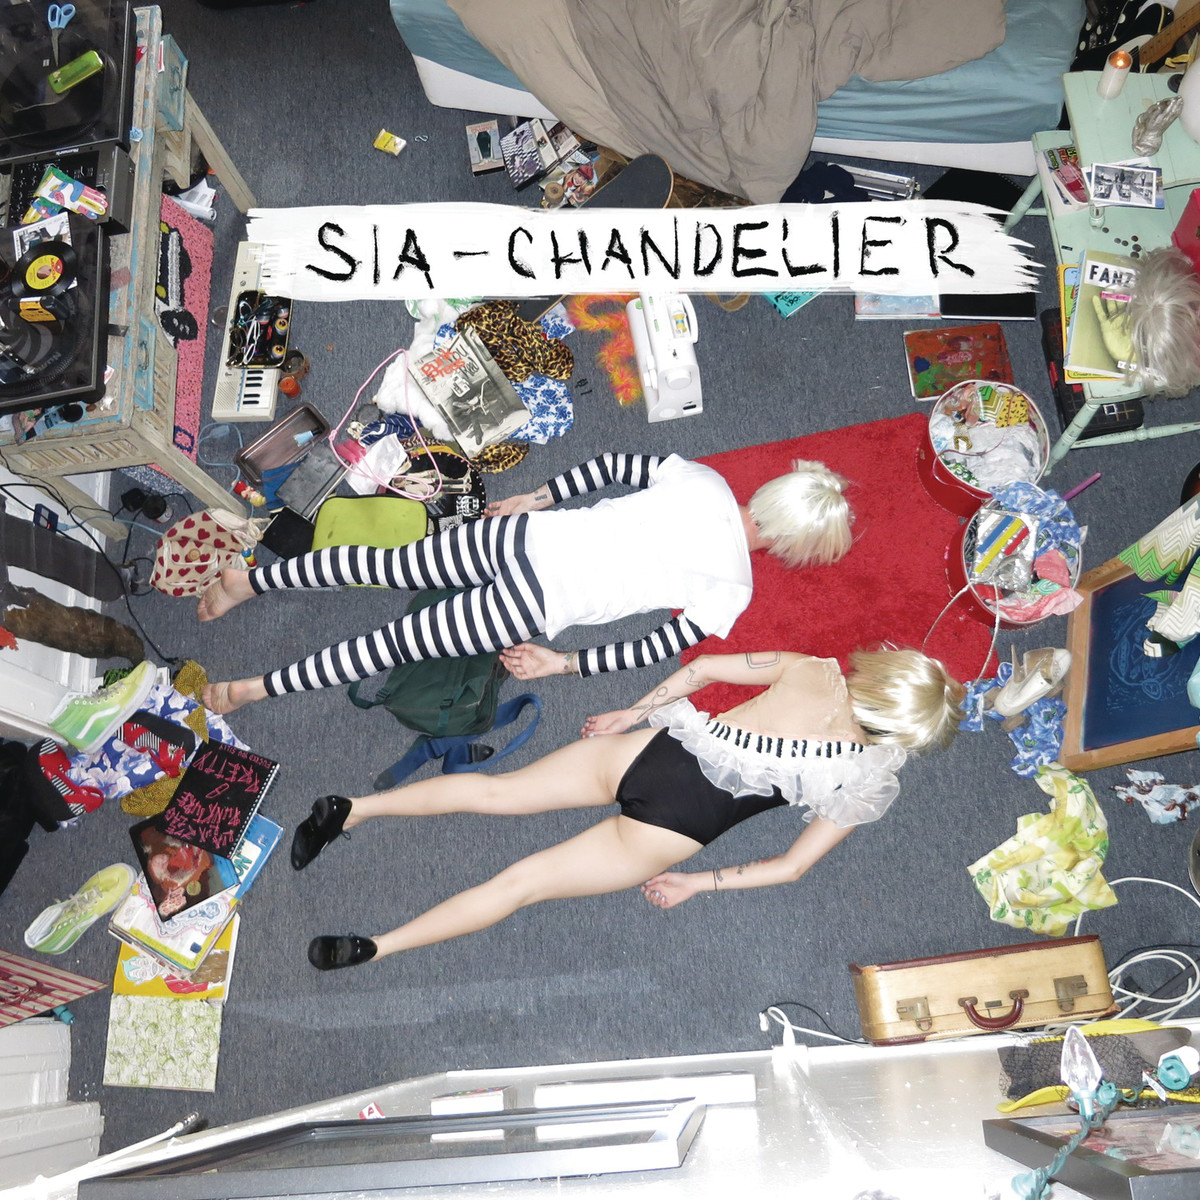 Chandelier - Sia (Erica Greenf13ld)